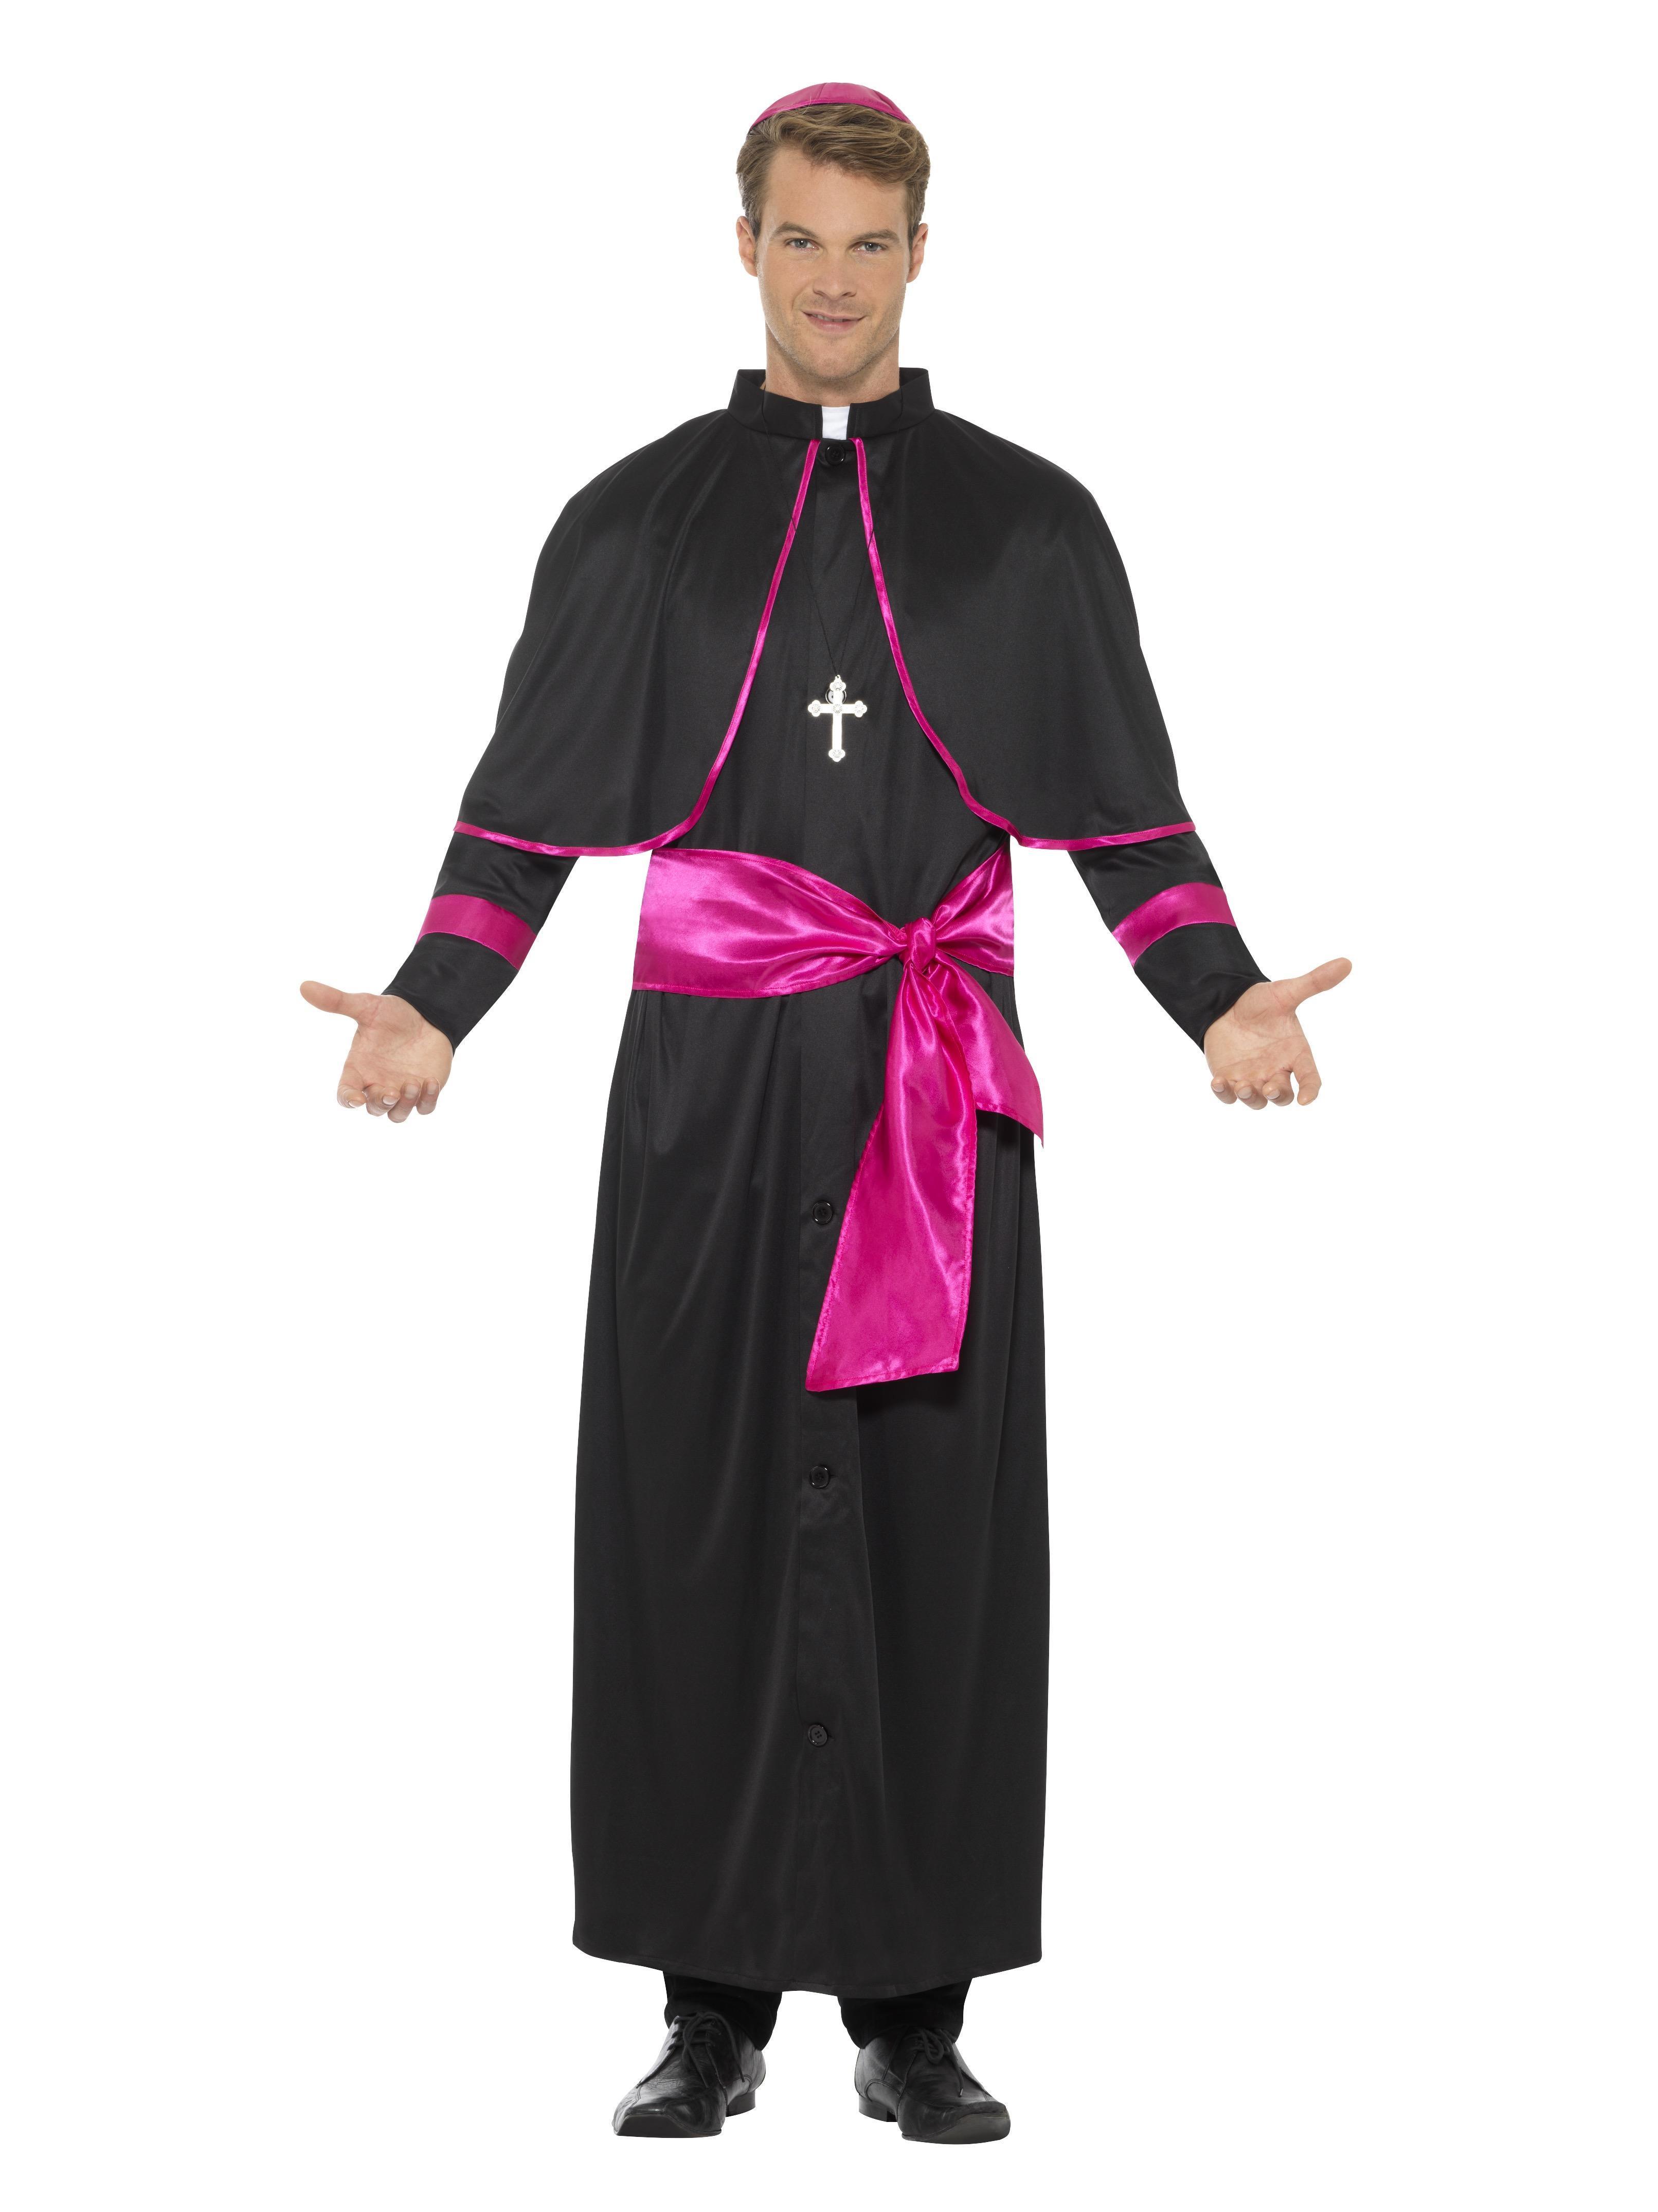 Культовая одежда. Ряса монаха Католика. Одеяние епископа Католика. Ряса католического священника референс. Костюм кардинала.